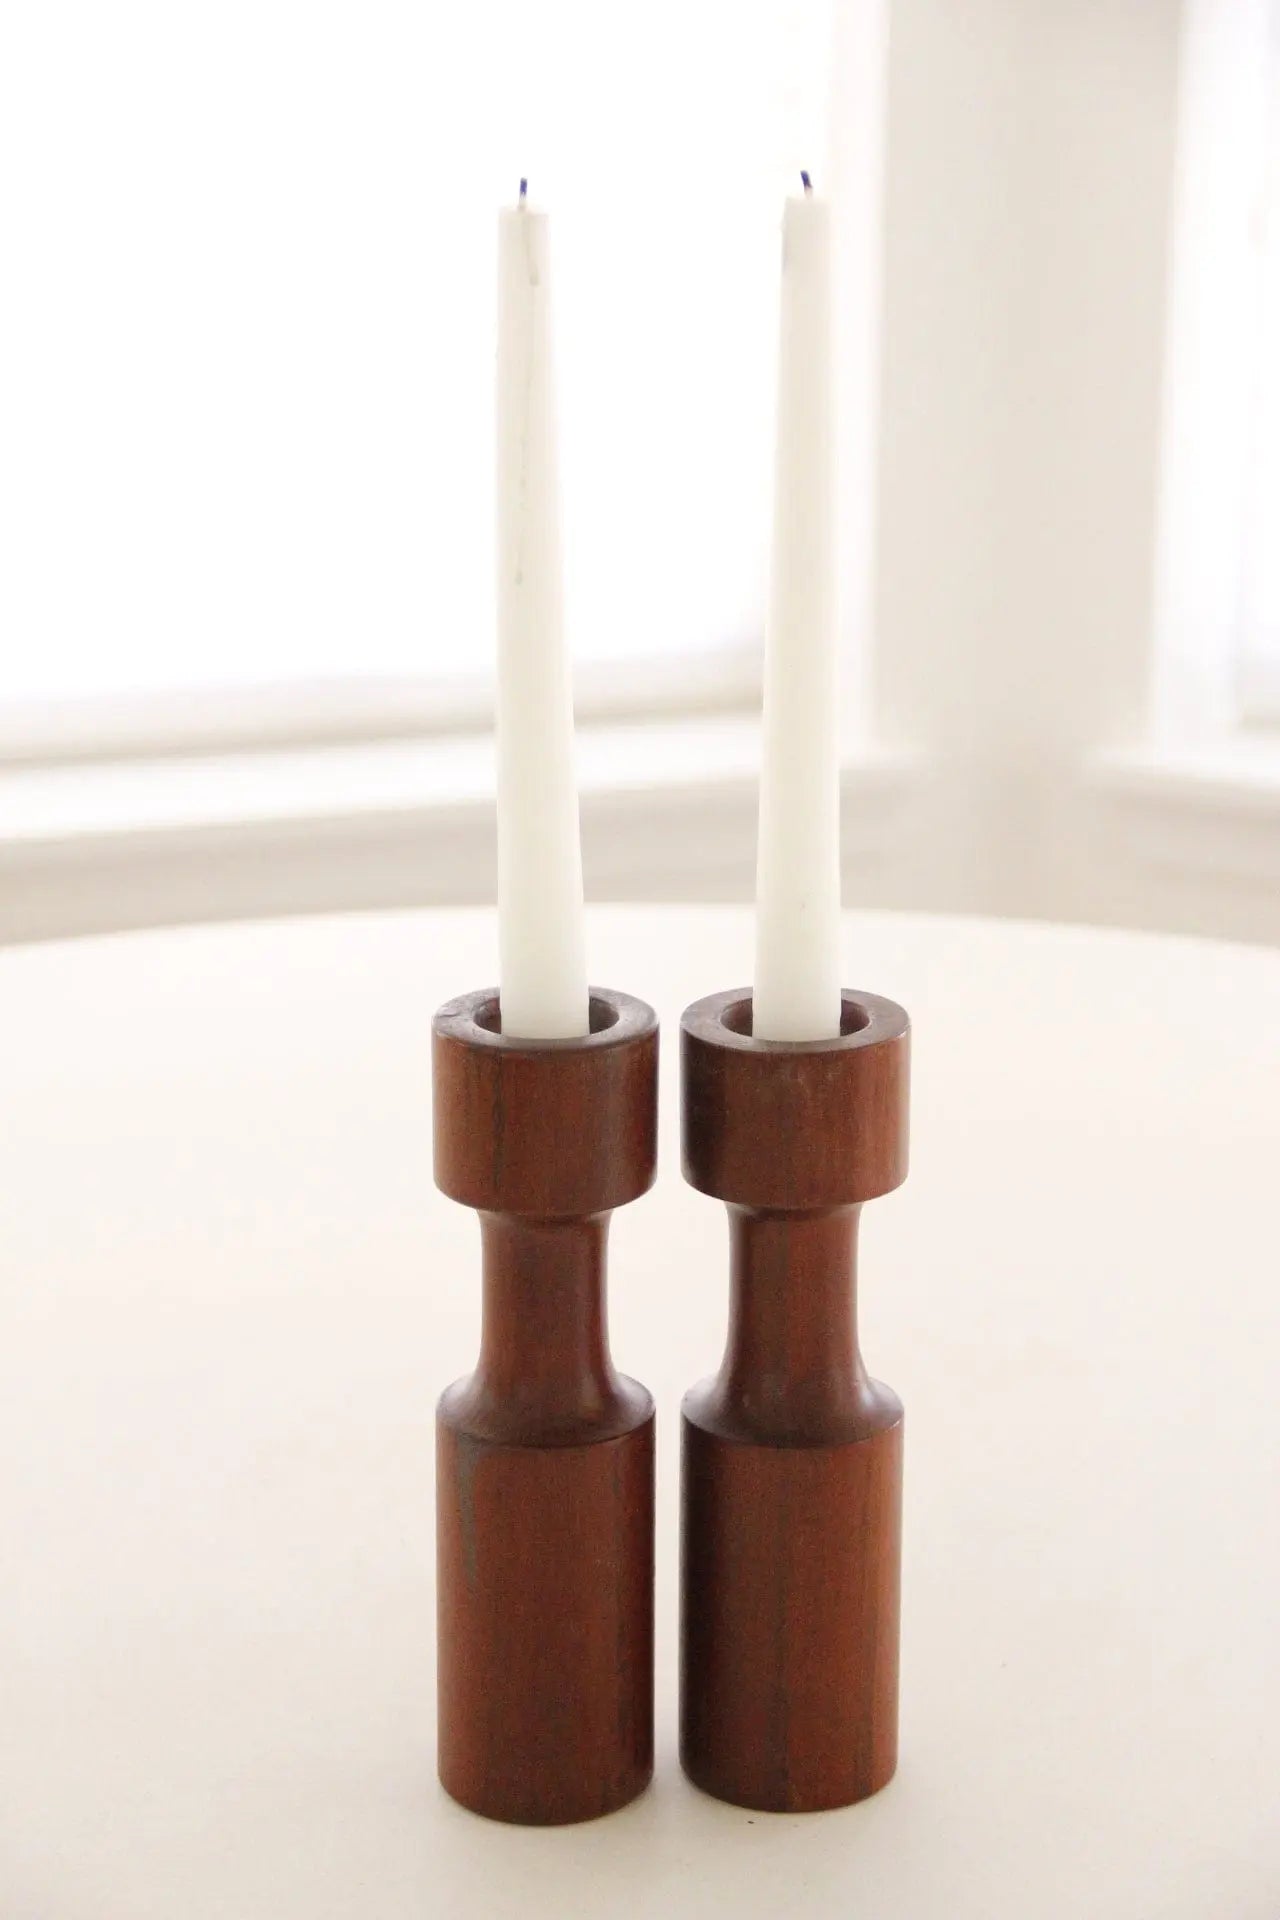 Midcentury Danish Modern Teak Candle Holders | Pair  Debra Hall Lifestyle